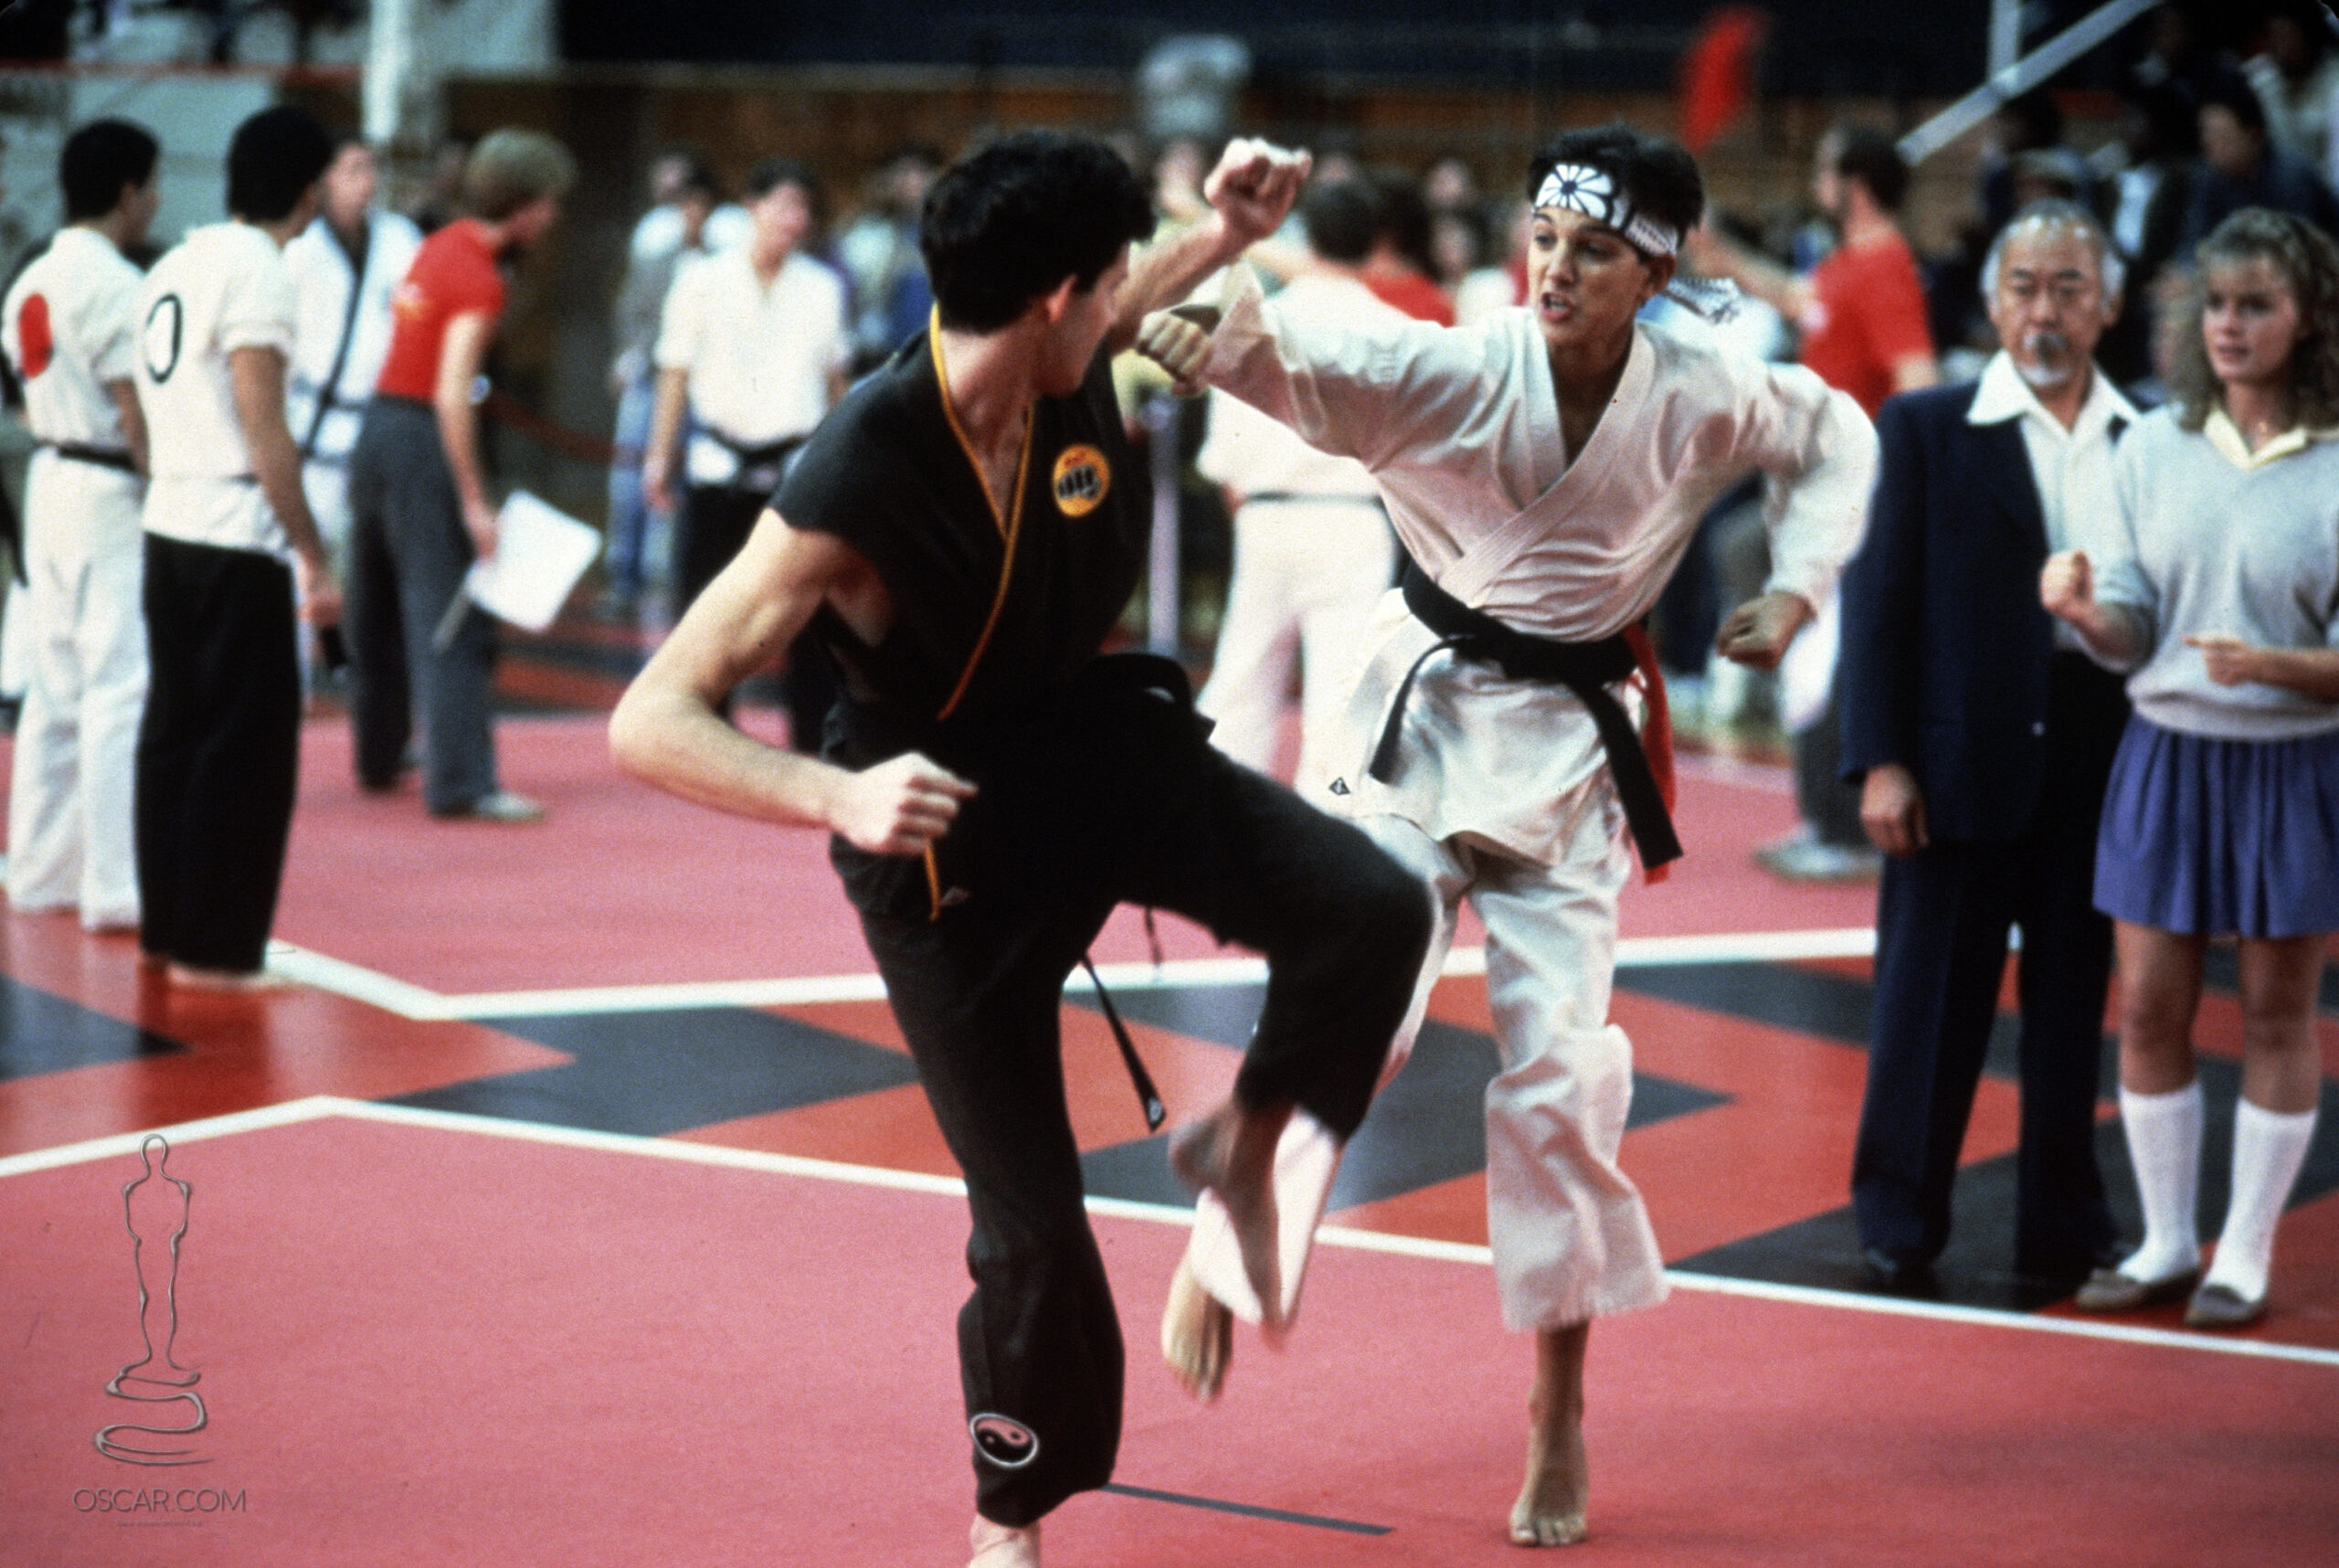 The Karate Kid (1984) ile ilgili gÃ¶rsel sonucu